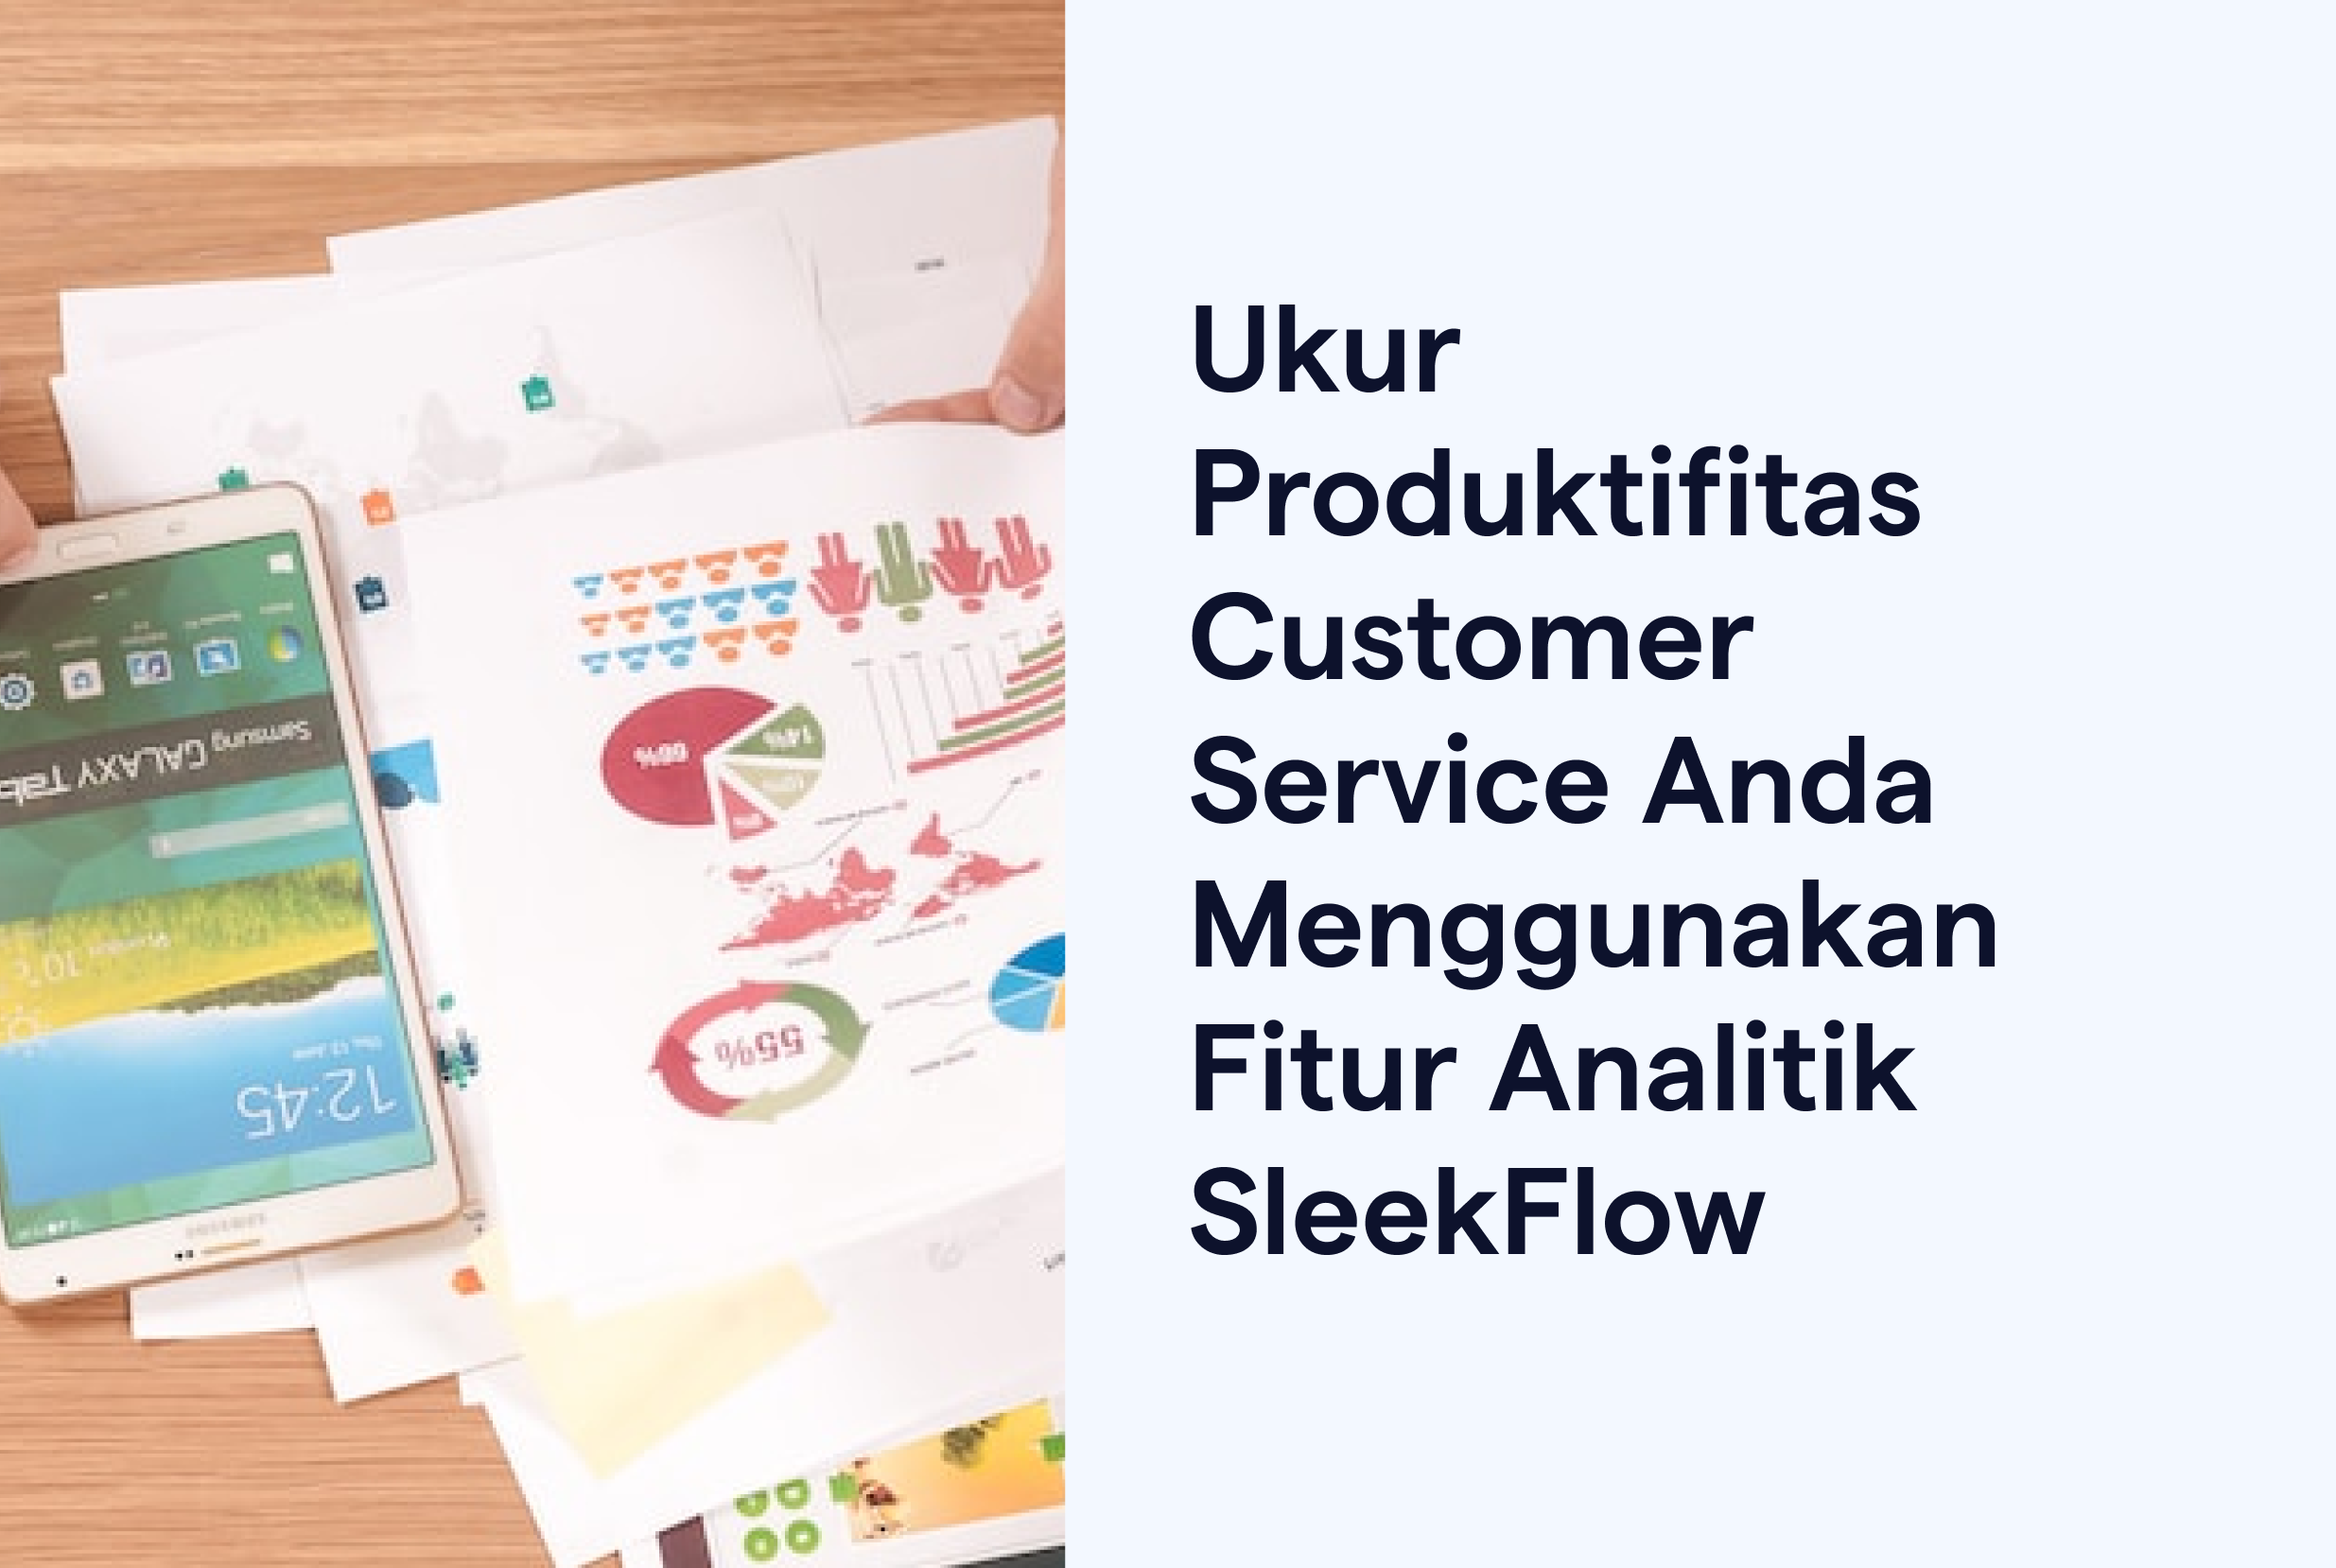 ukur produktifitas customer service dengan sleekflow